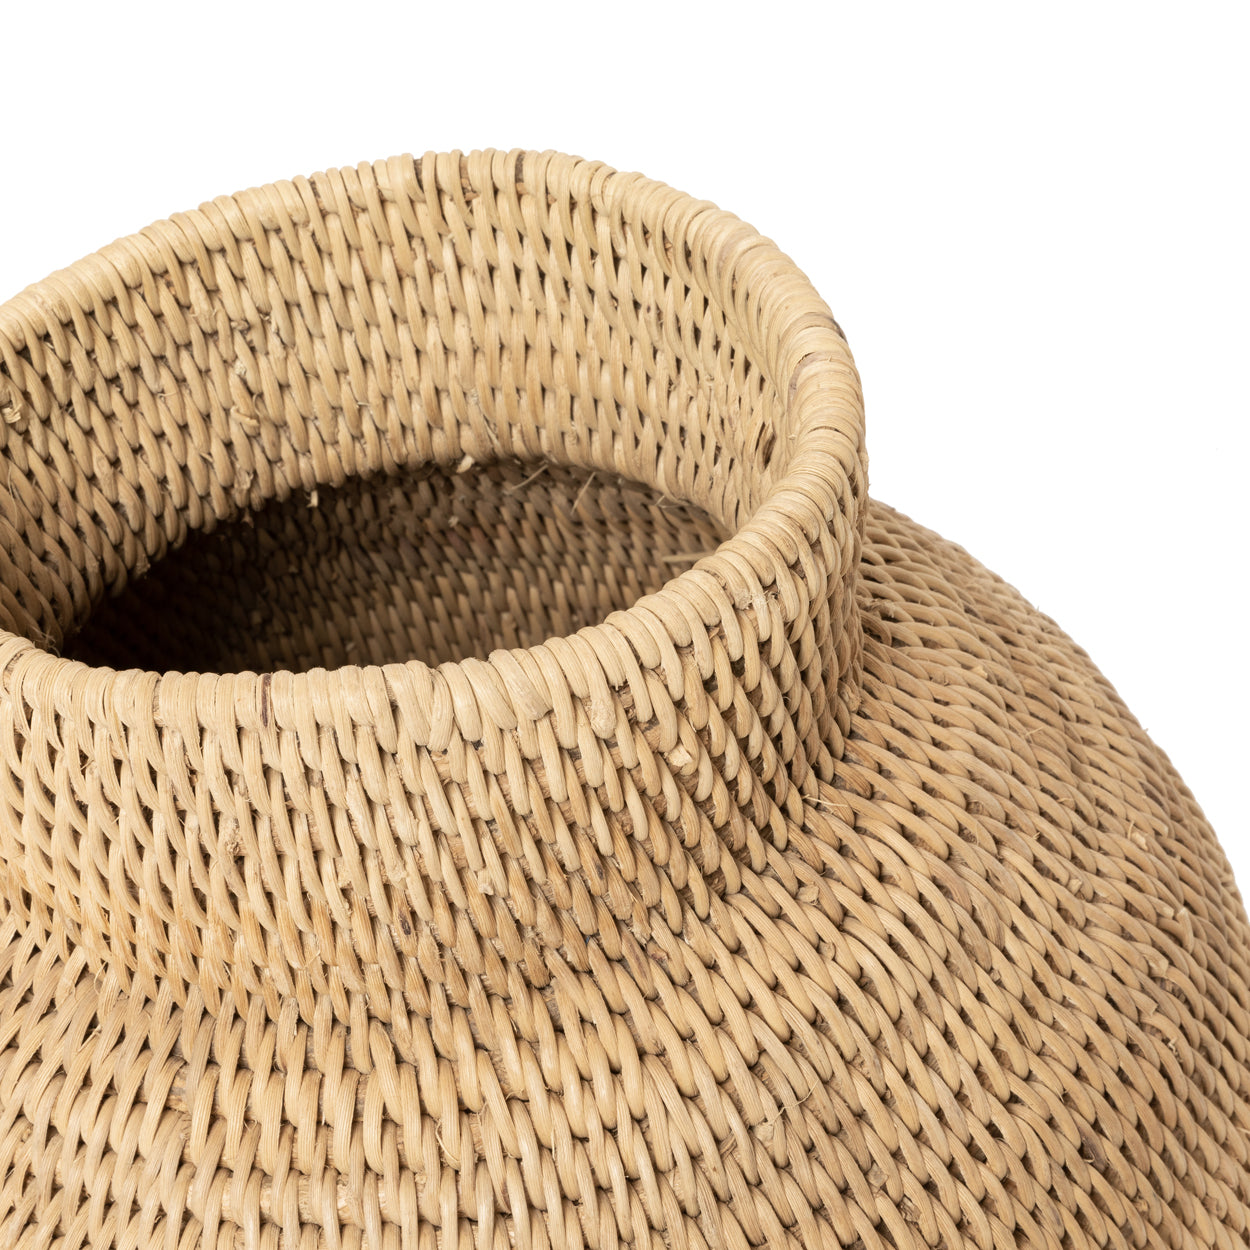 Buhera basket natural 80 cm